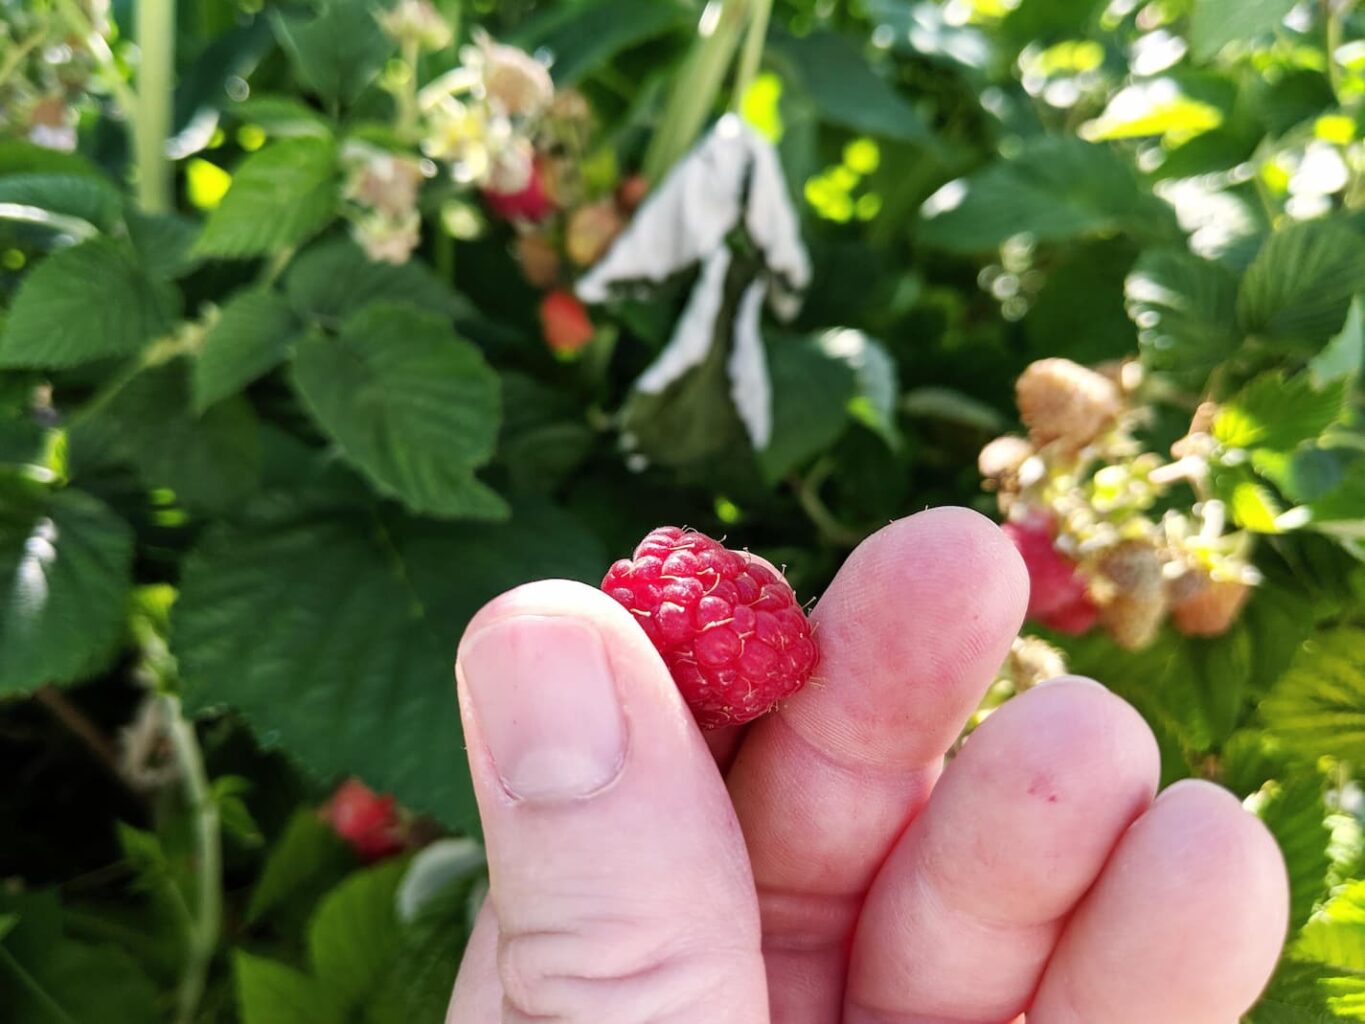 An image of freshly picked raspberry fruit in the garden.